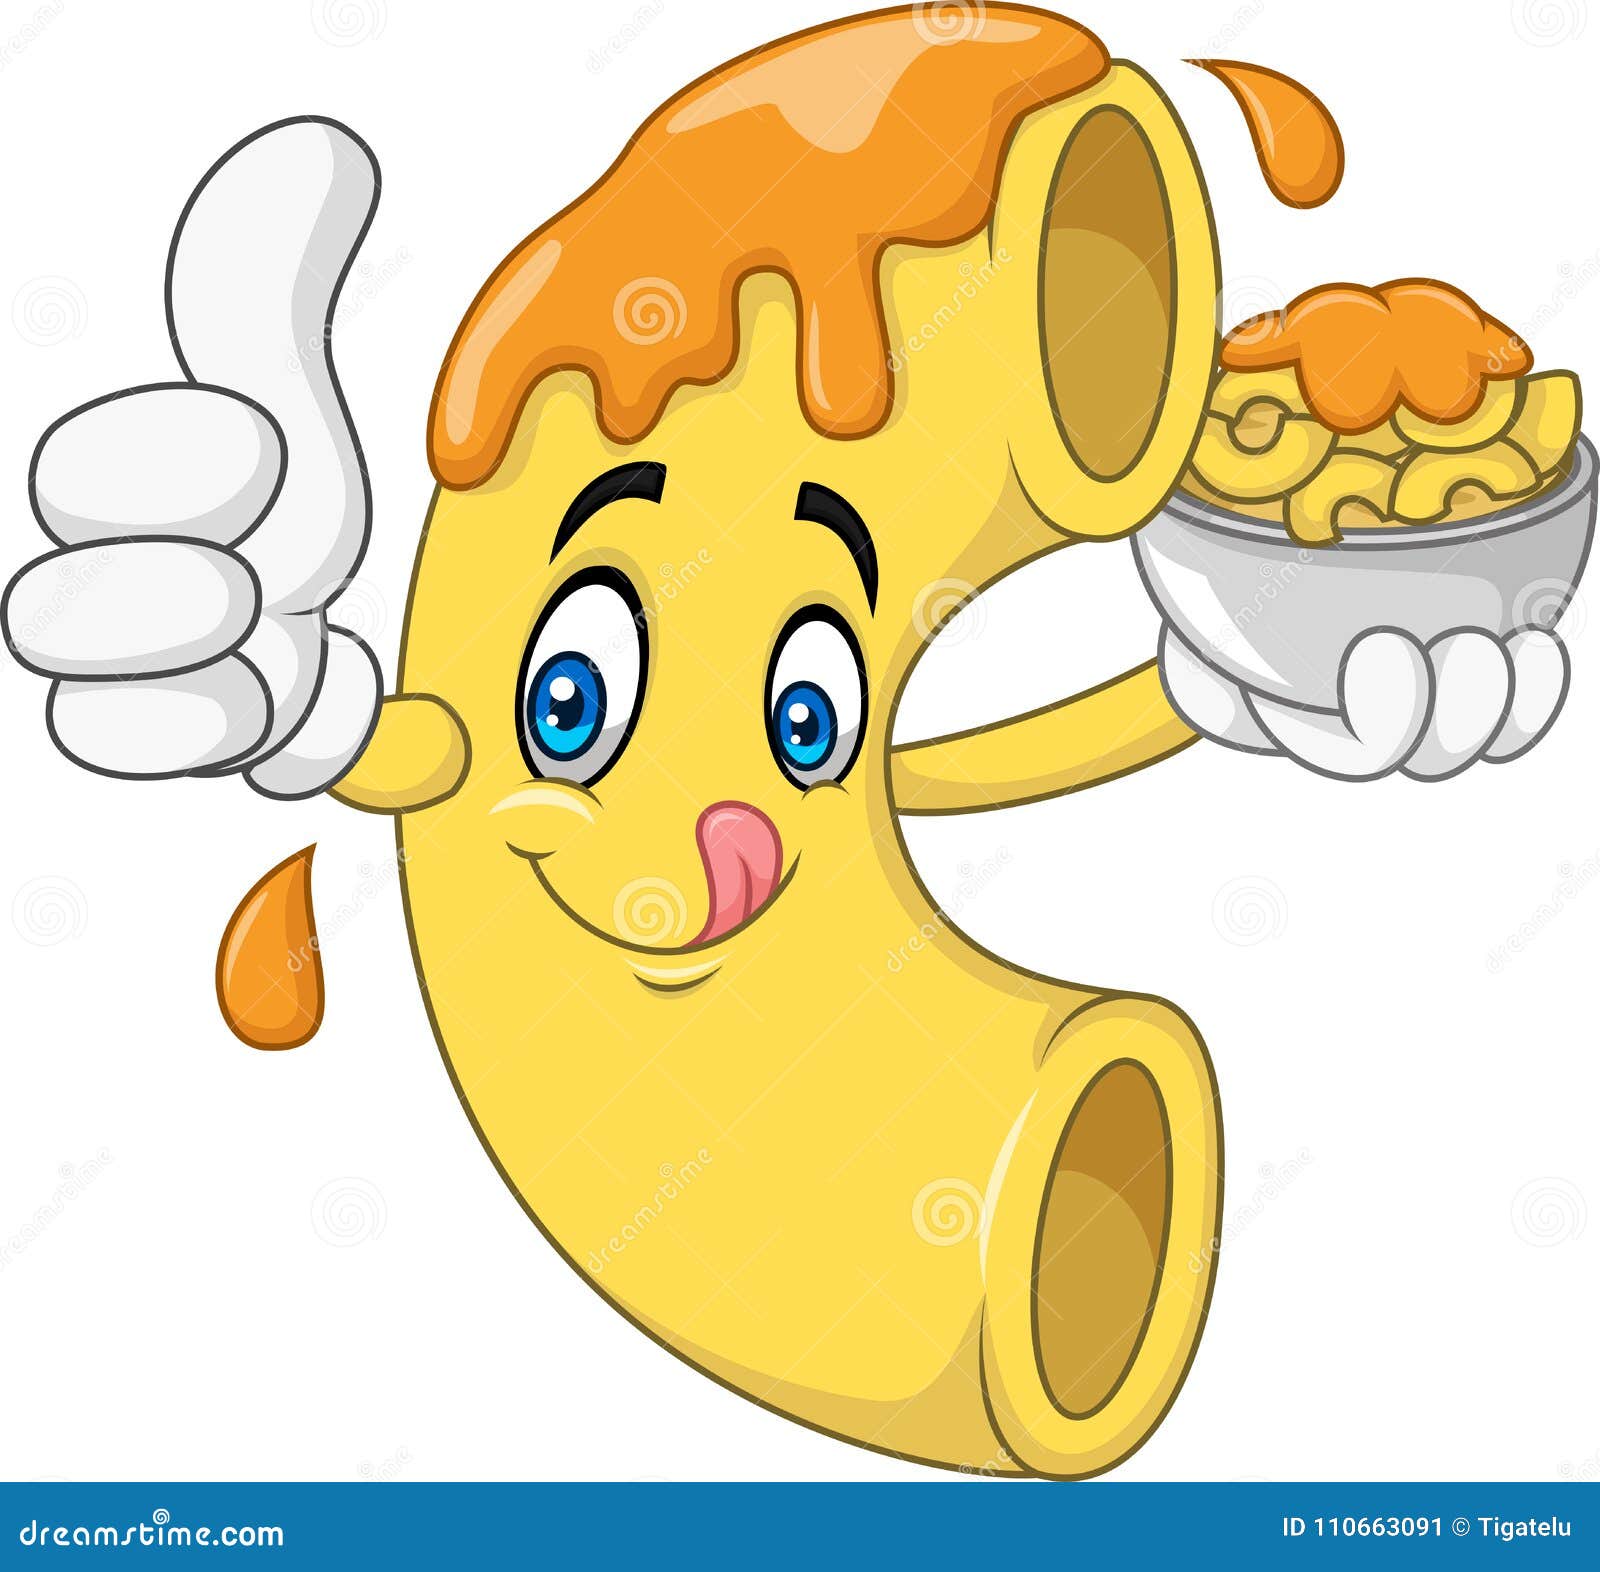 Mac N Cheese Balls Stock Vector Illustration and Royalty Free Mac N Cheese  Balls Clipart